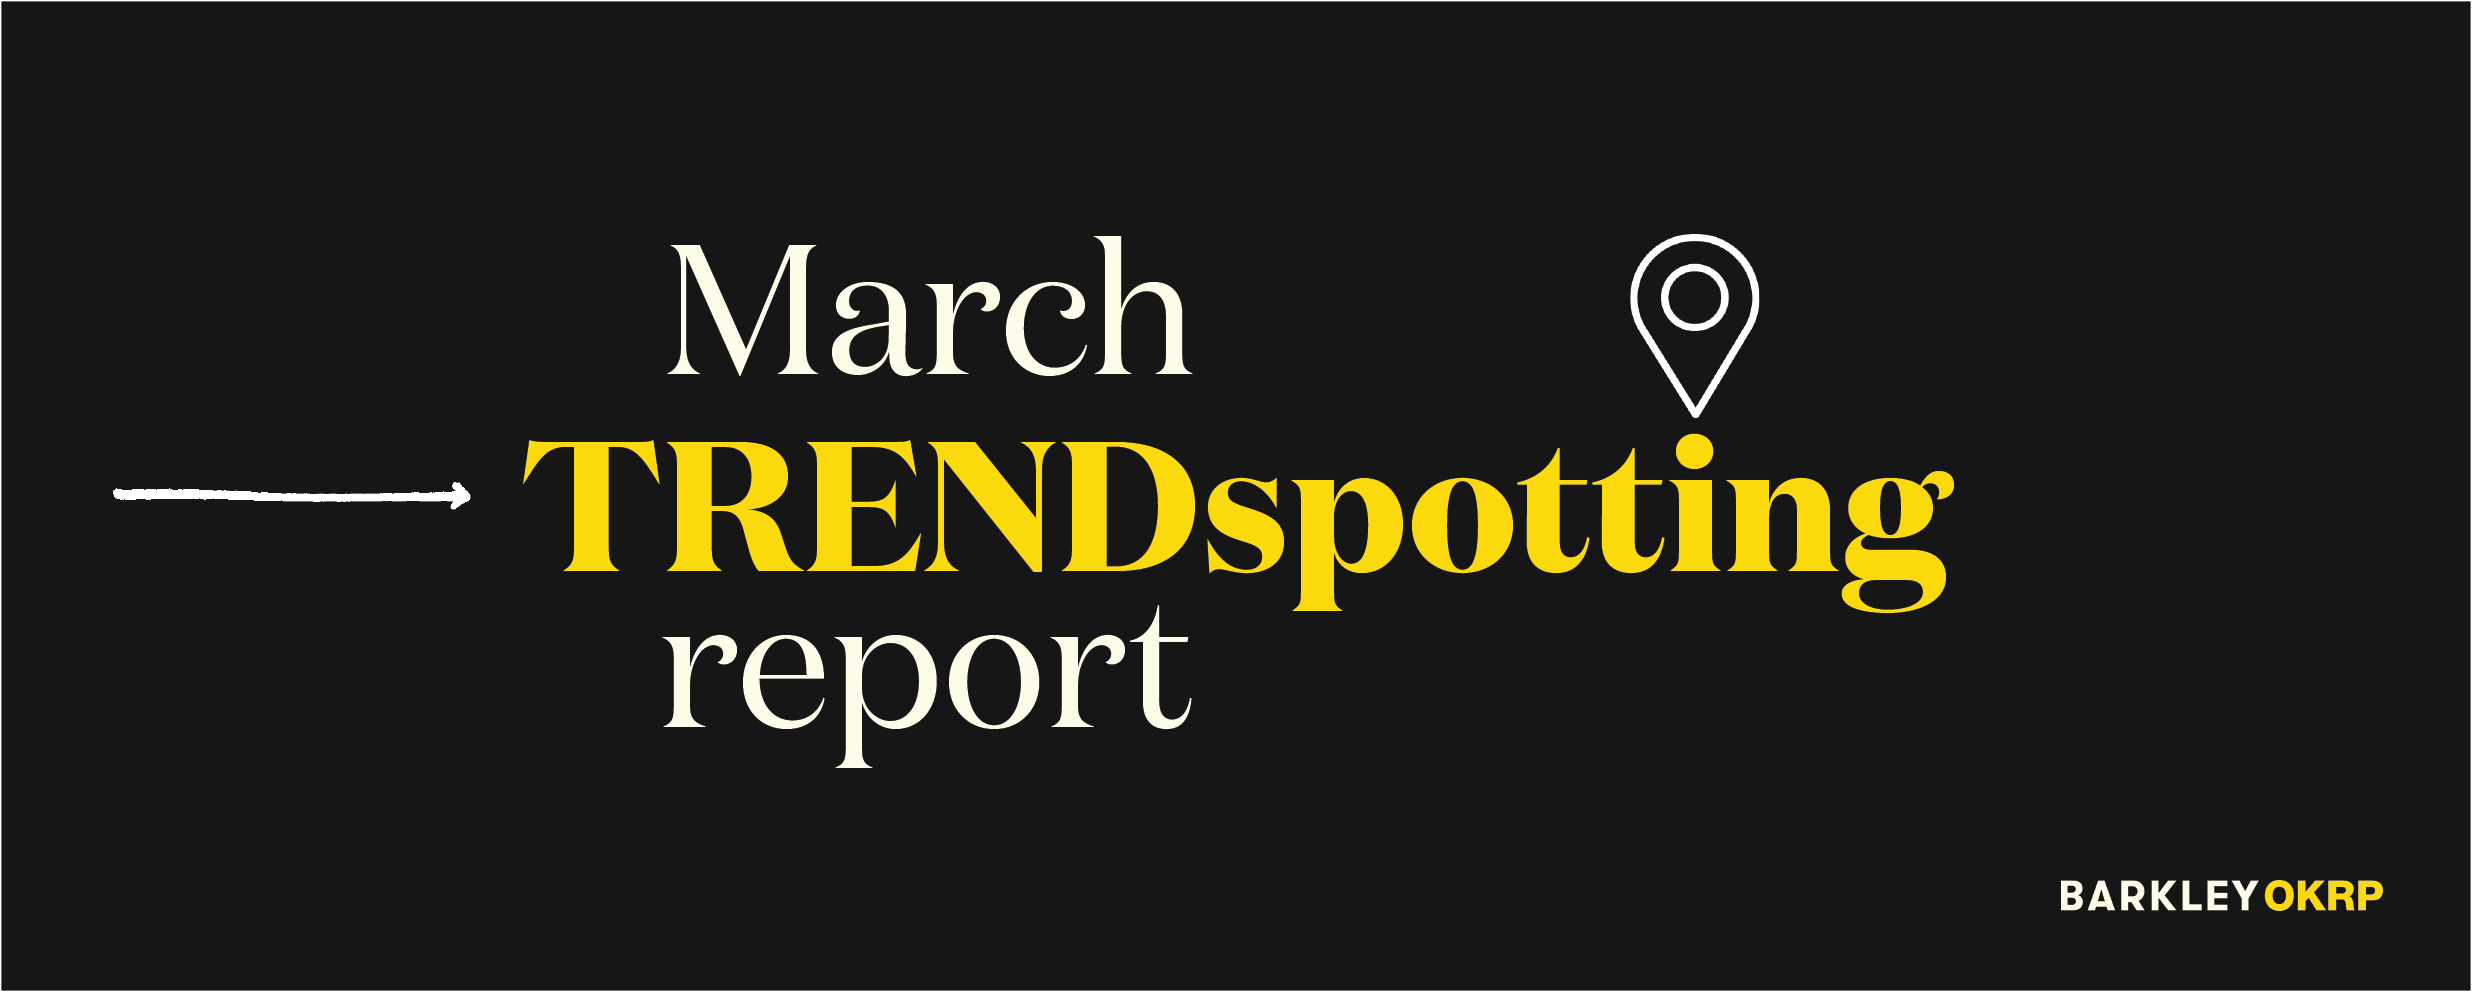 March TRENDspotting Report 2470x990